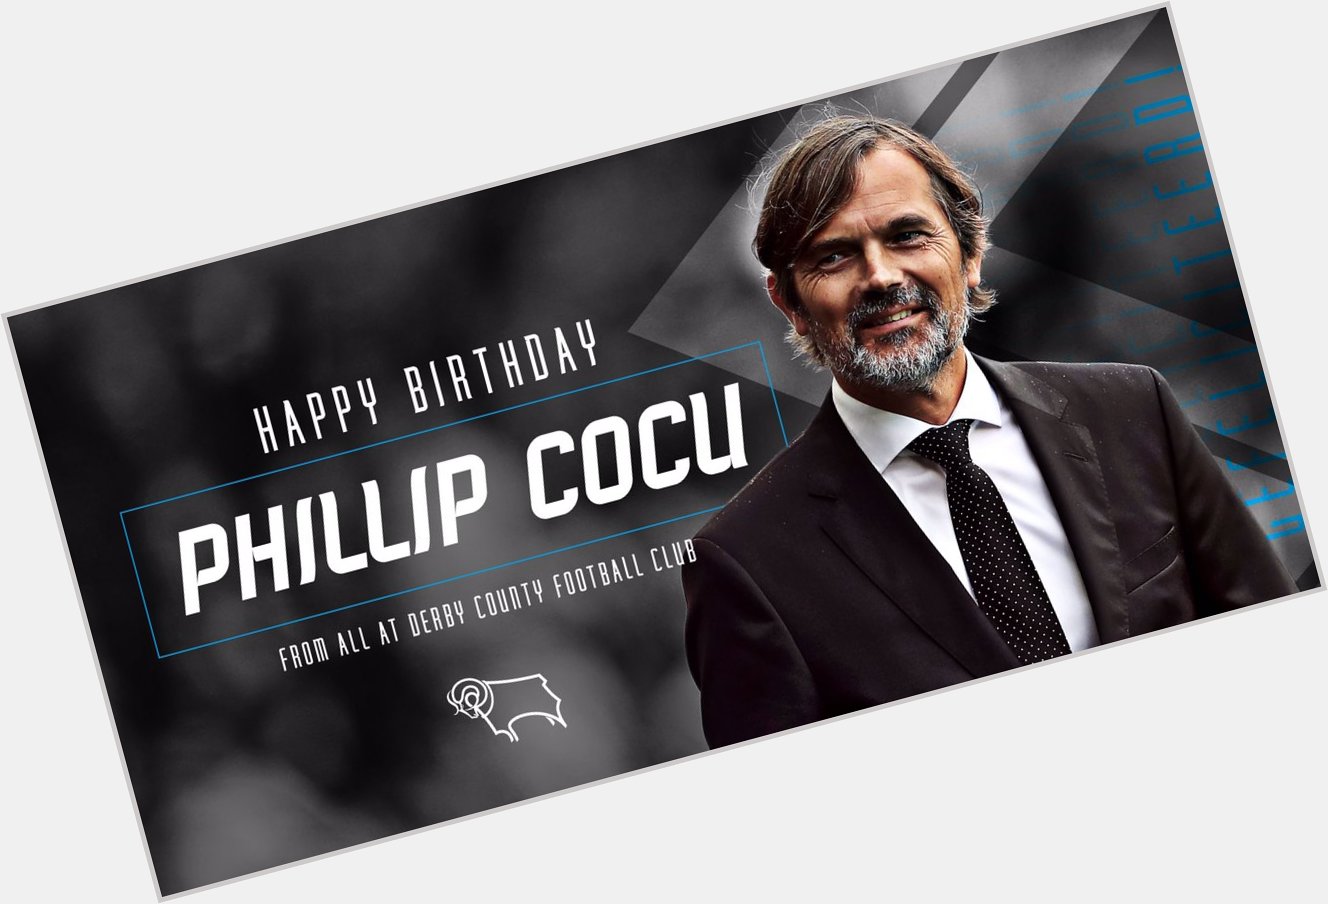 Happy birthday, boss! Phillip Cocu is 4  9  today... 